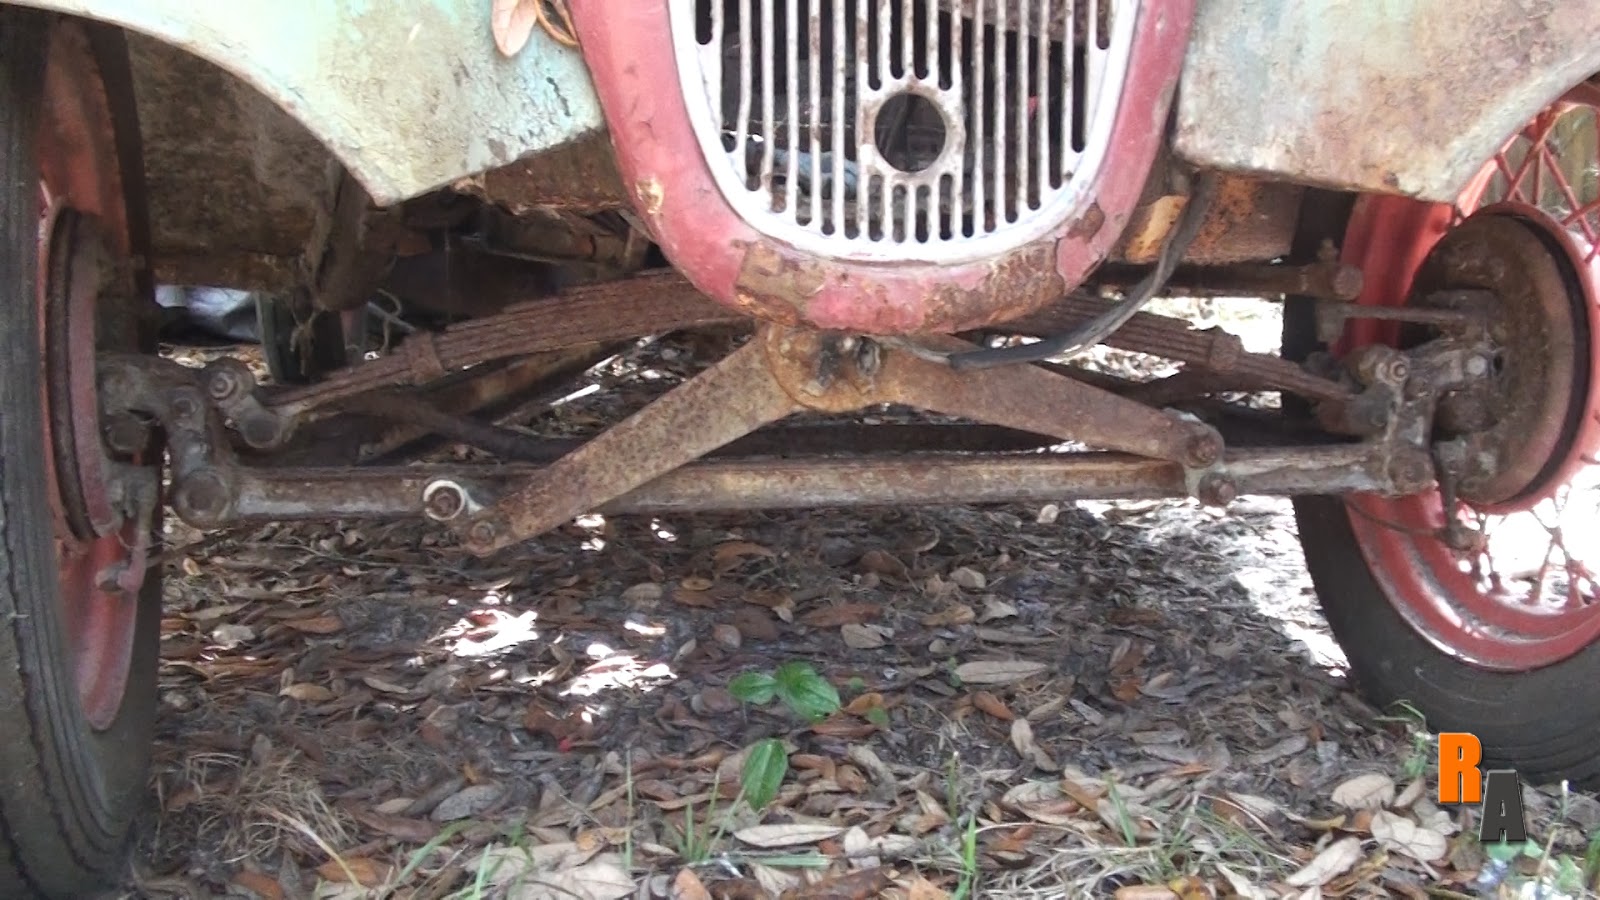 1934 austin 7 central florida abandoned british car